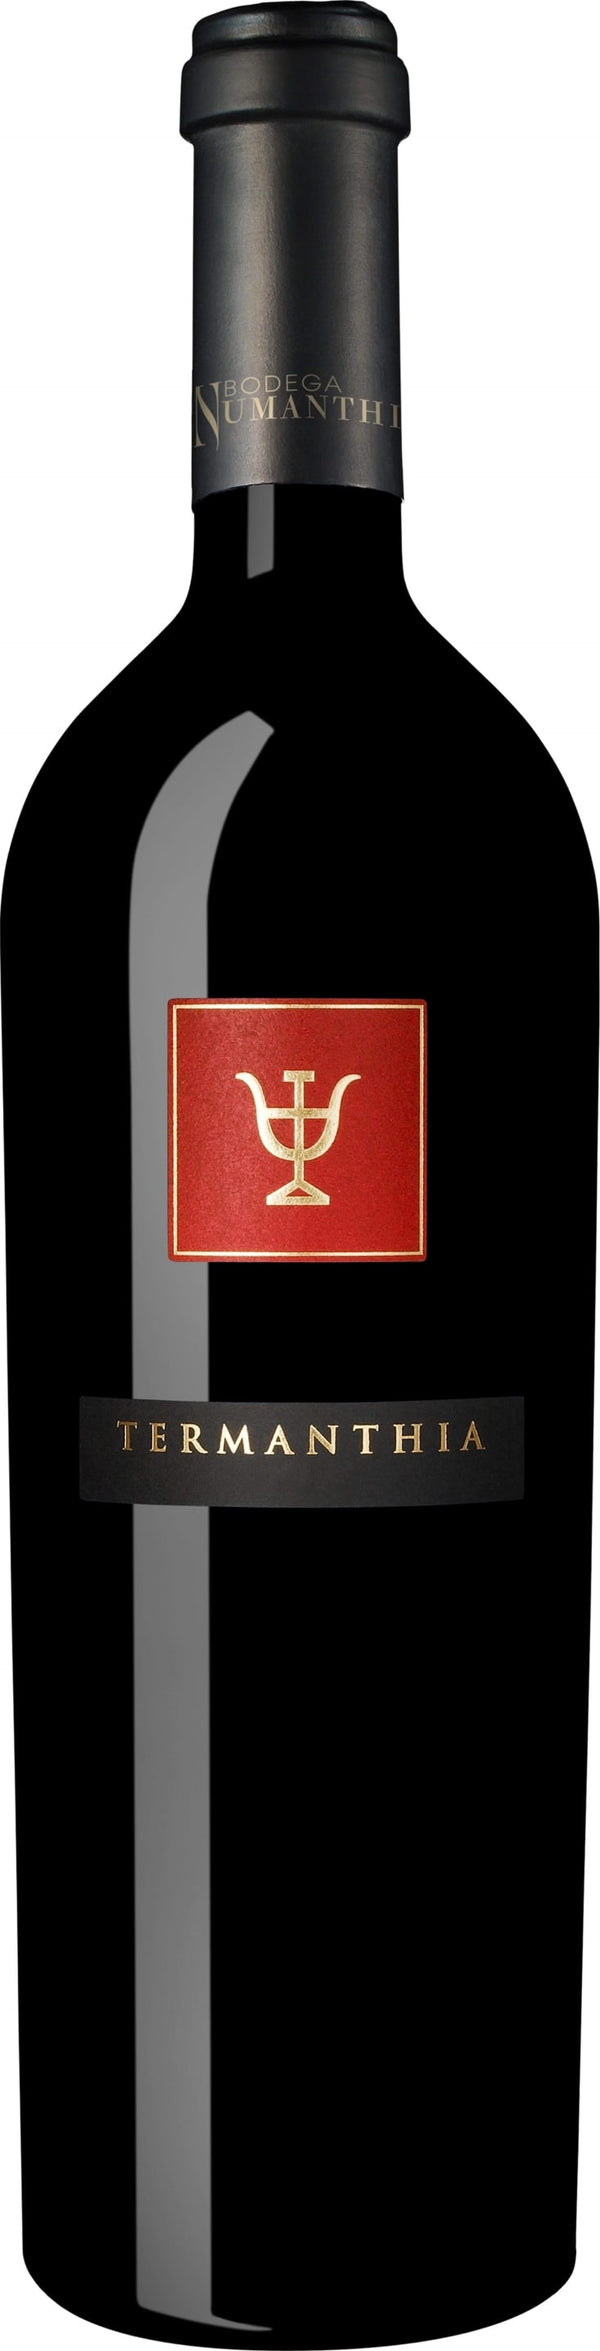 Numanthia Termanthia 2012 6x75cl - Just Wines 